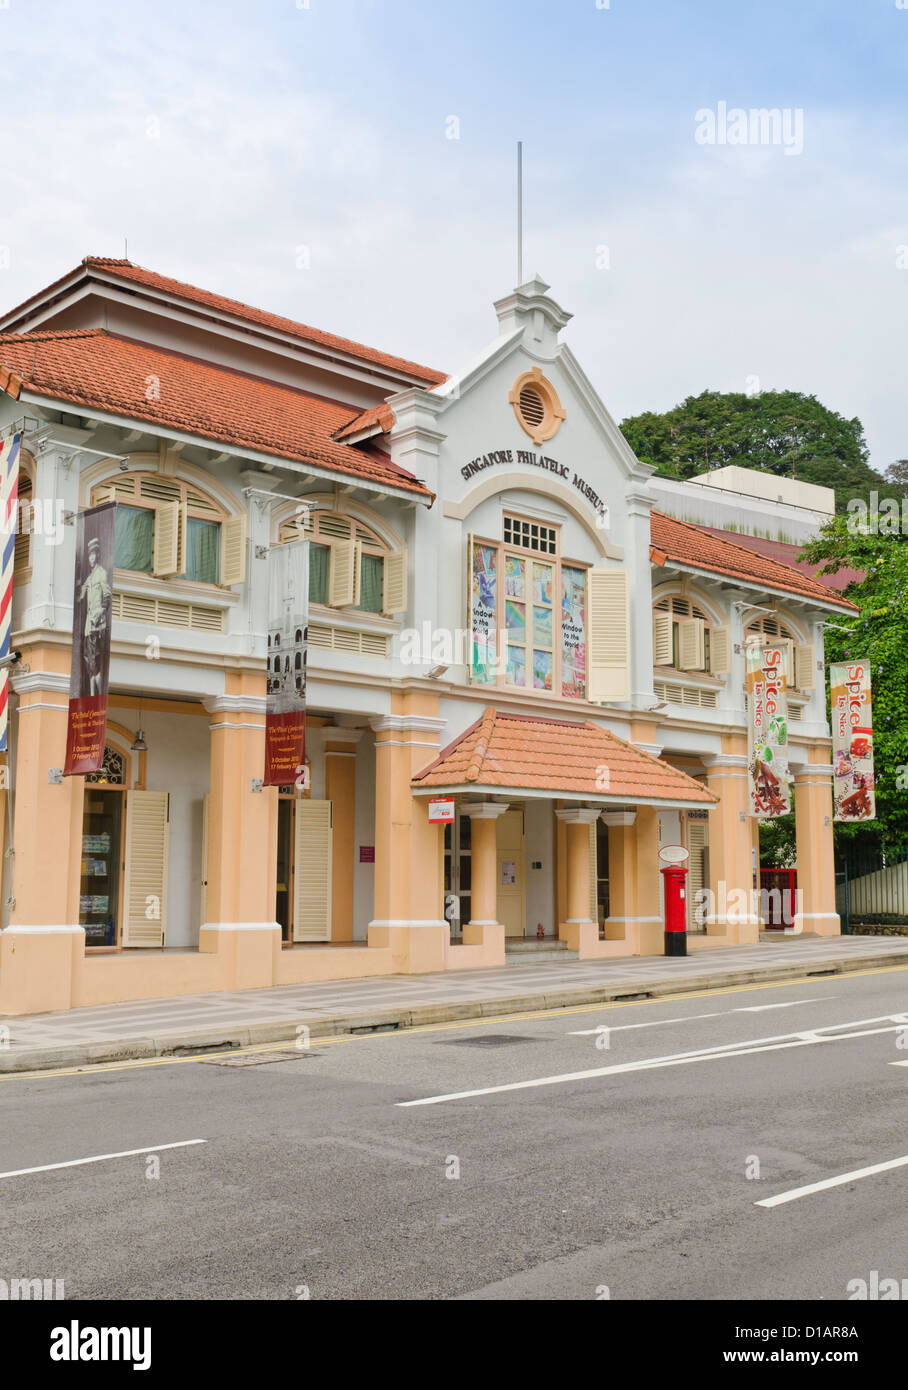 Singapore Philatelic Museum in Singapore Stock Photo